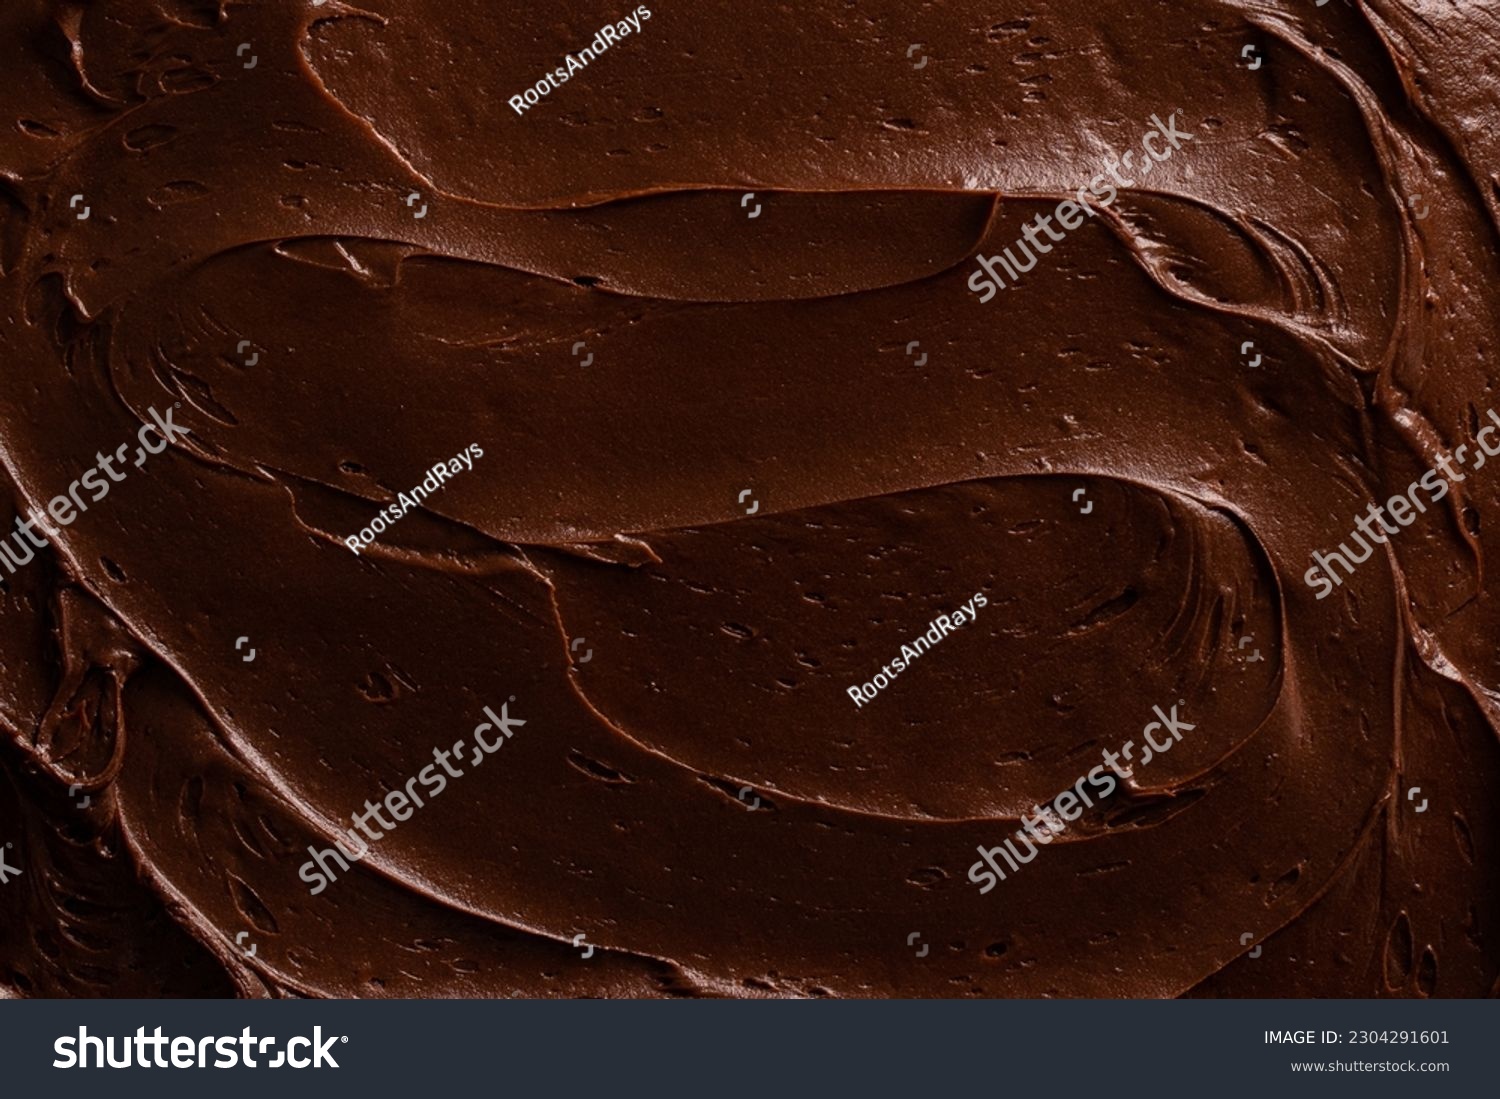 Chocolate icing on a chocolate fudge cake close up.  #2304291601